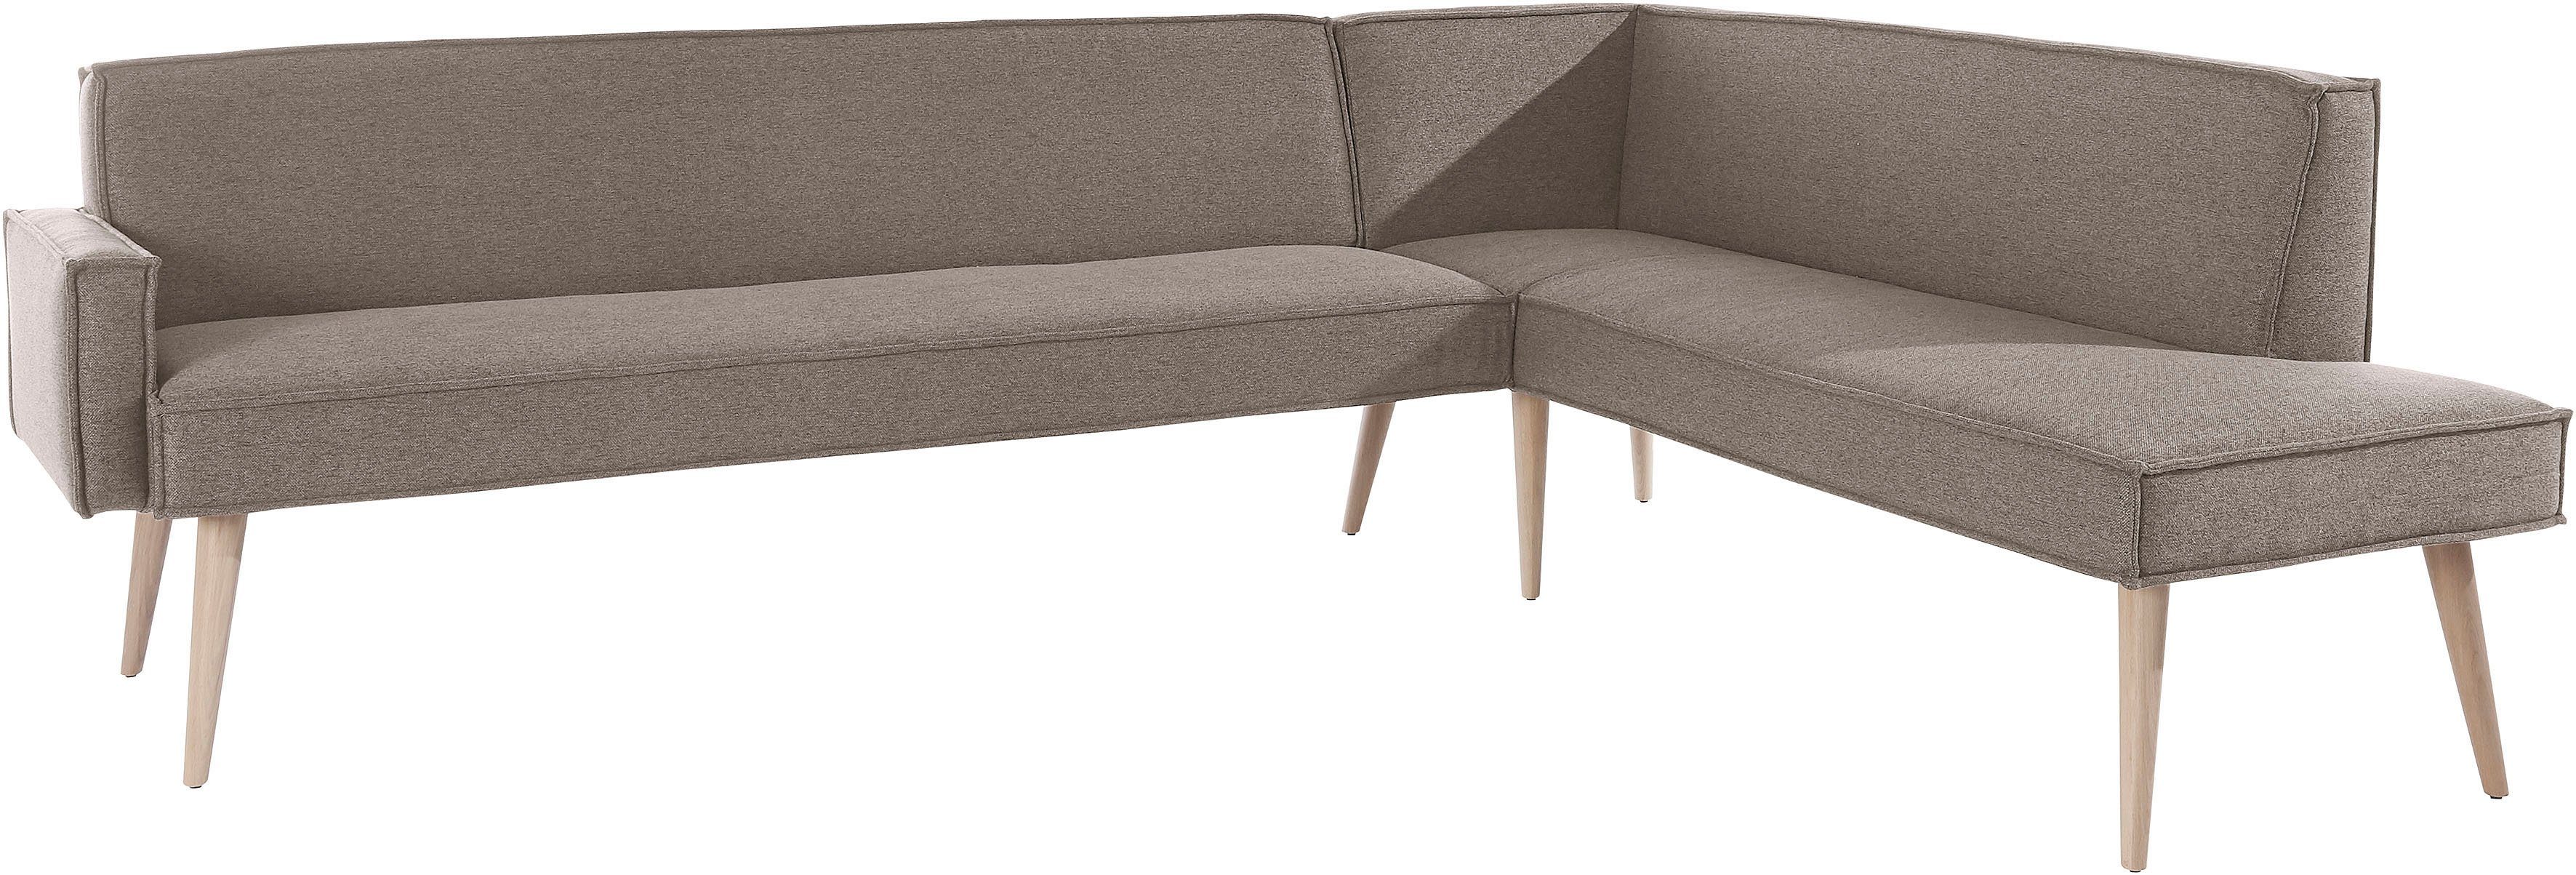 exxpo - sofa fashion Eckbank Lungo, Frei im Raum stellbar, In hochwertiger  Verarbeitung